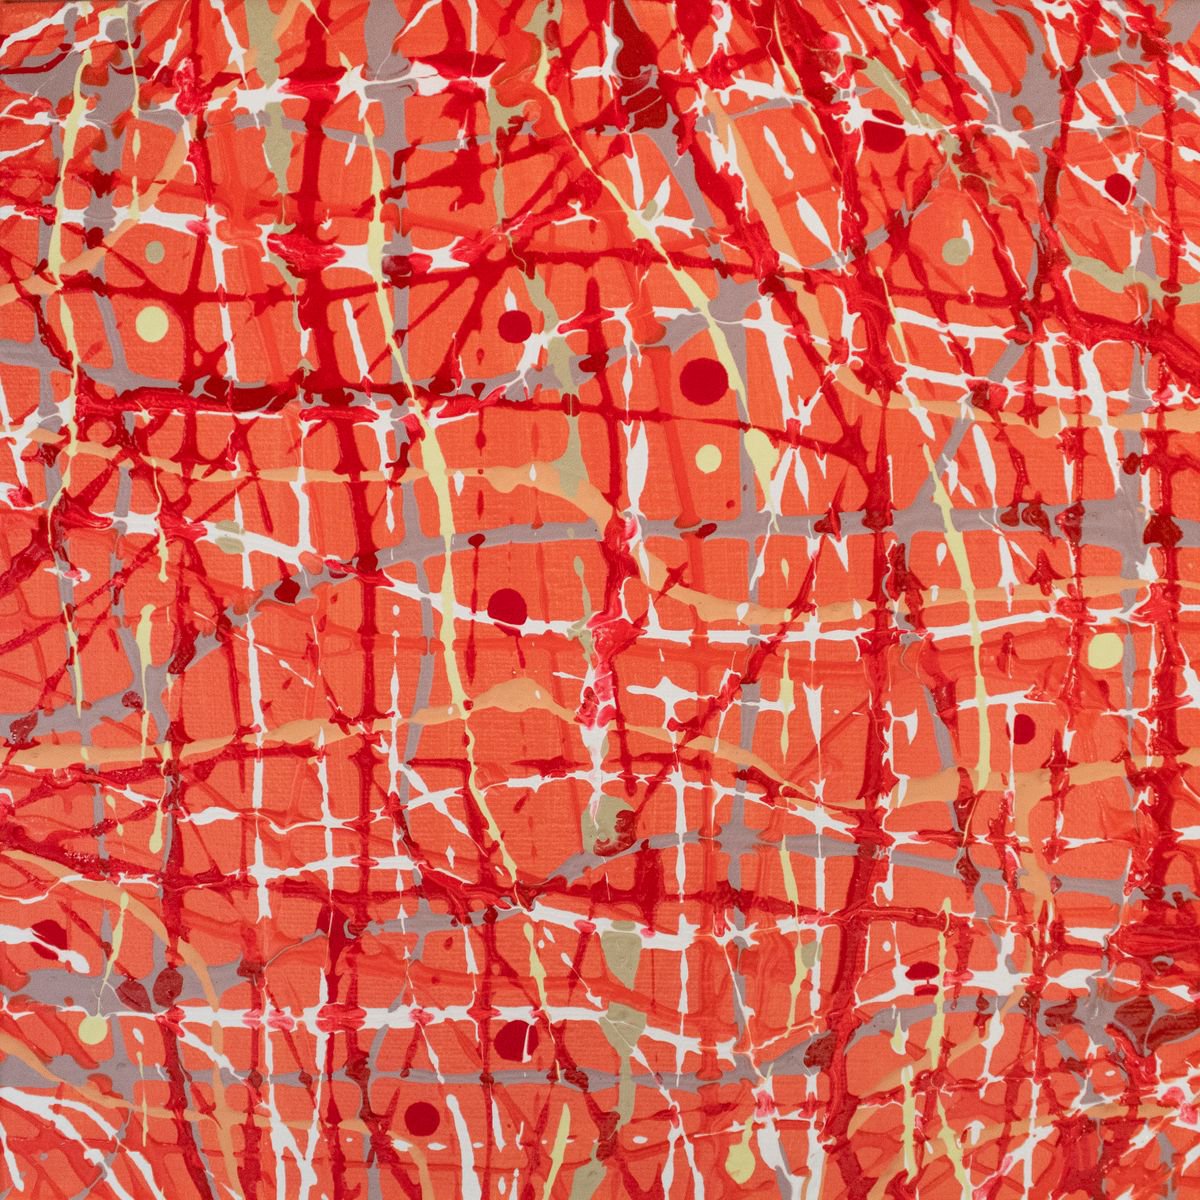 Red Abstract by verginia bogdanova